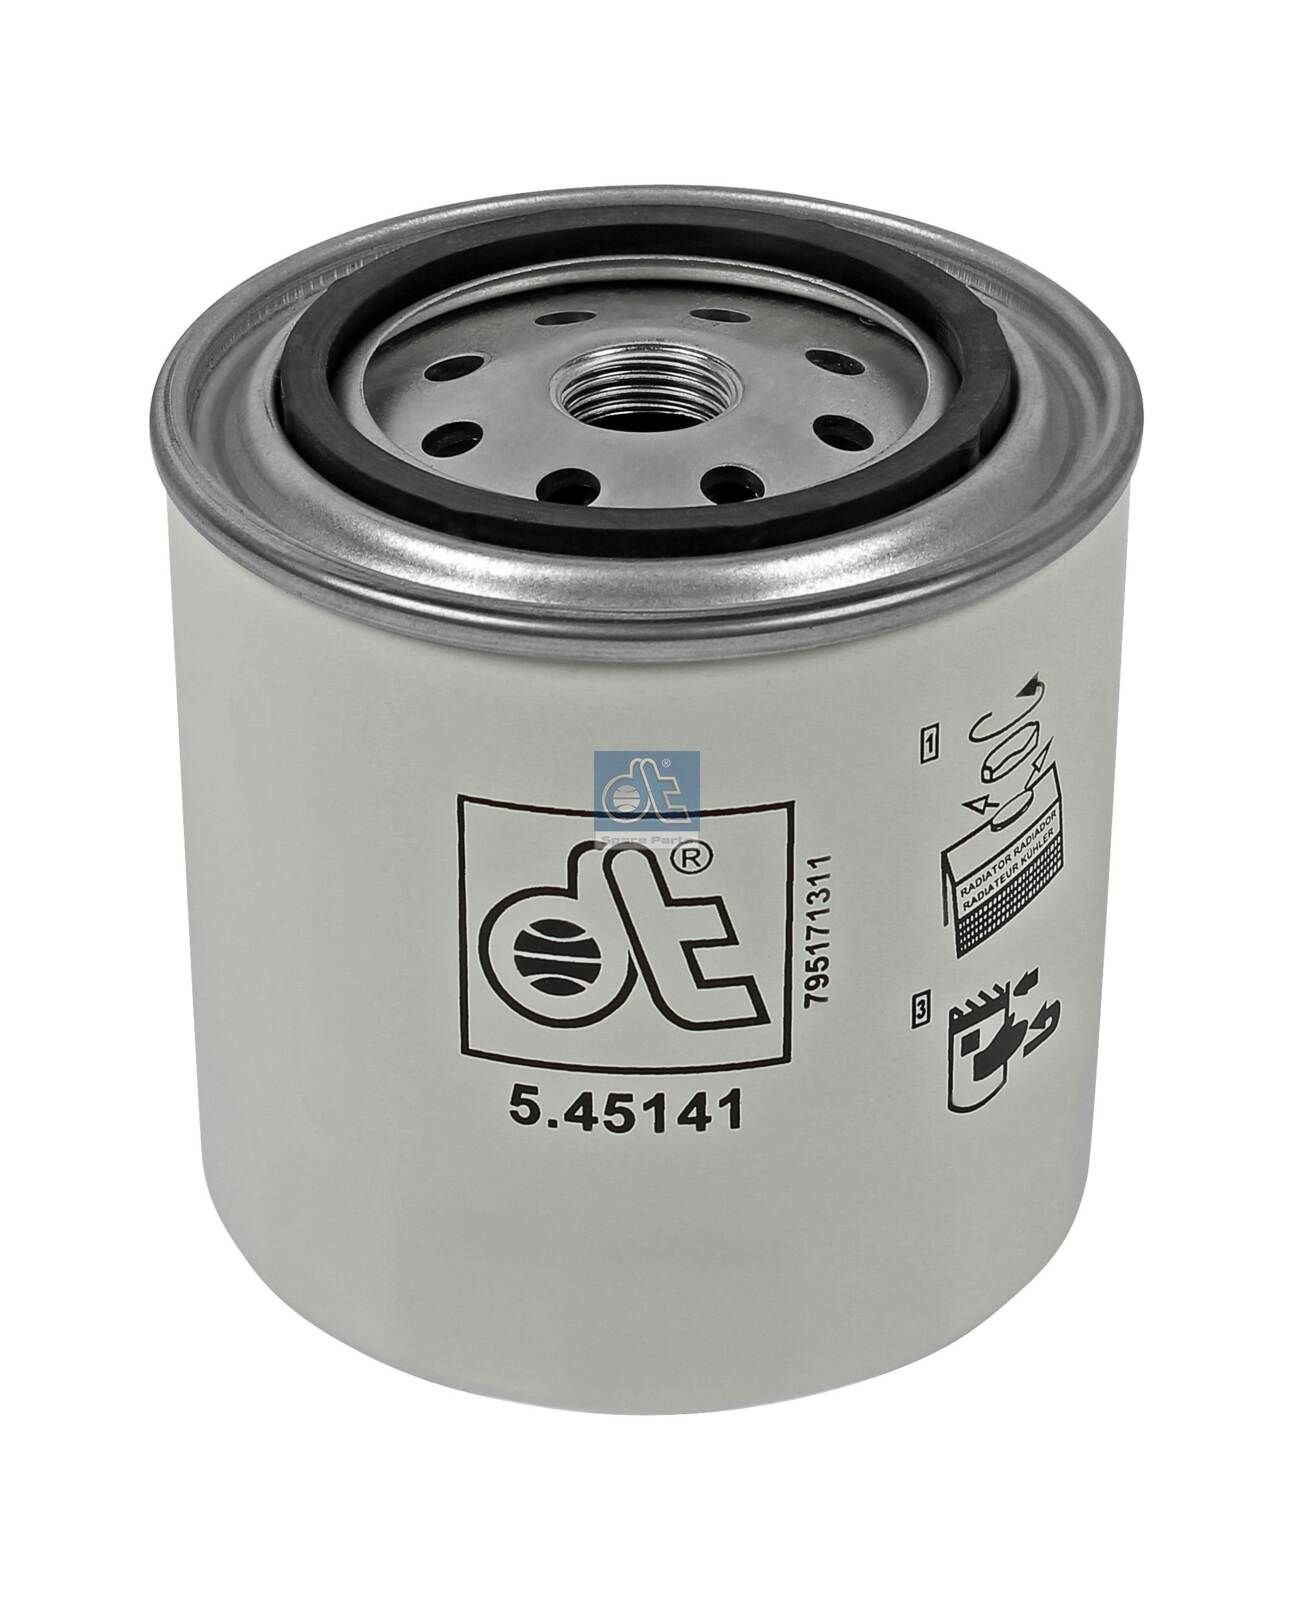 WA 940/1 DT Spare Parts 5.45141 Coolant Filter 846 05017